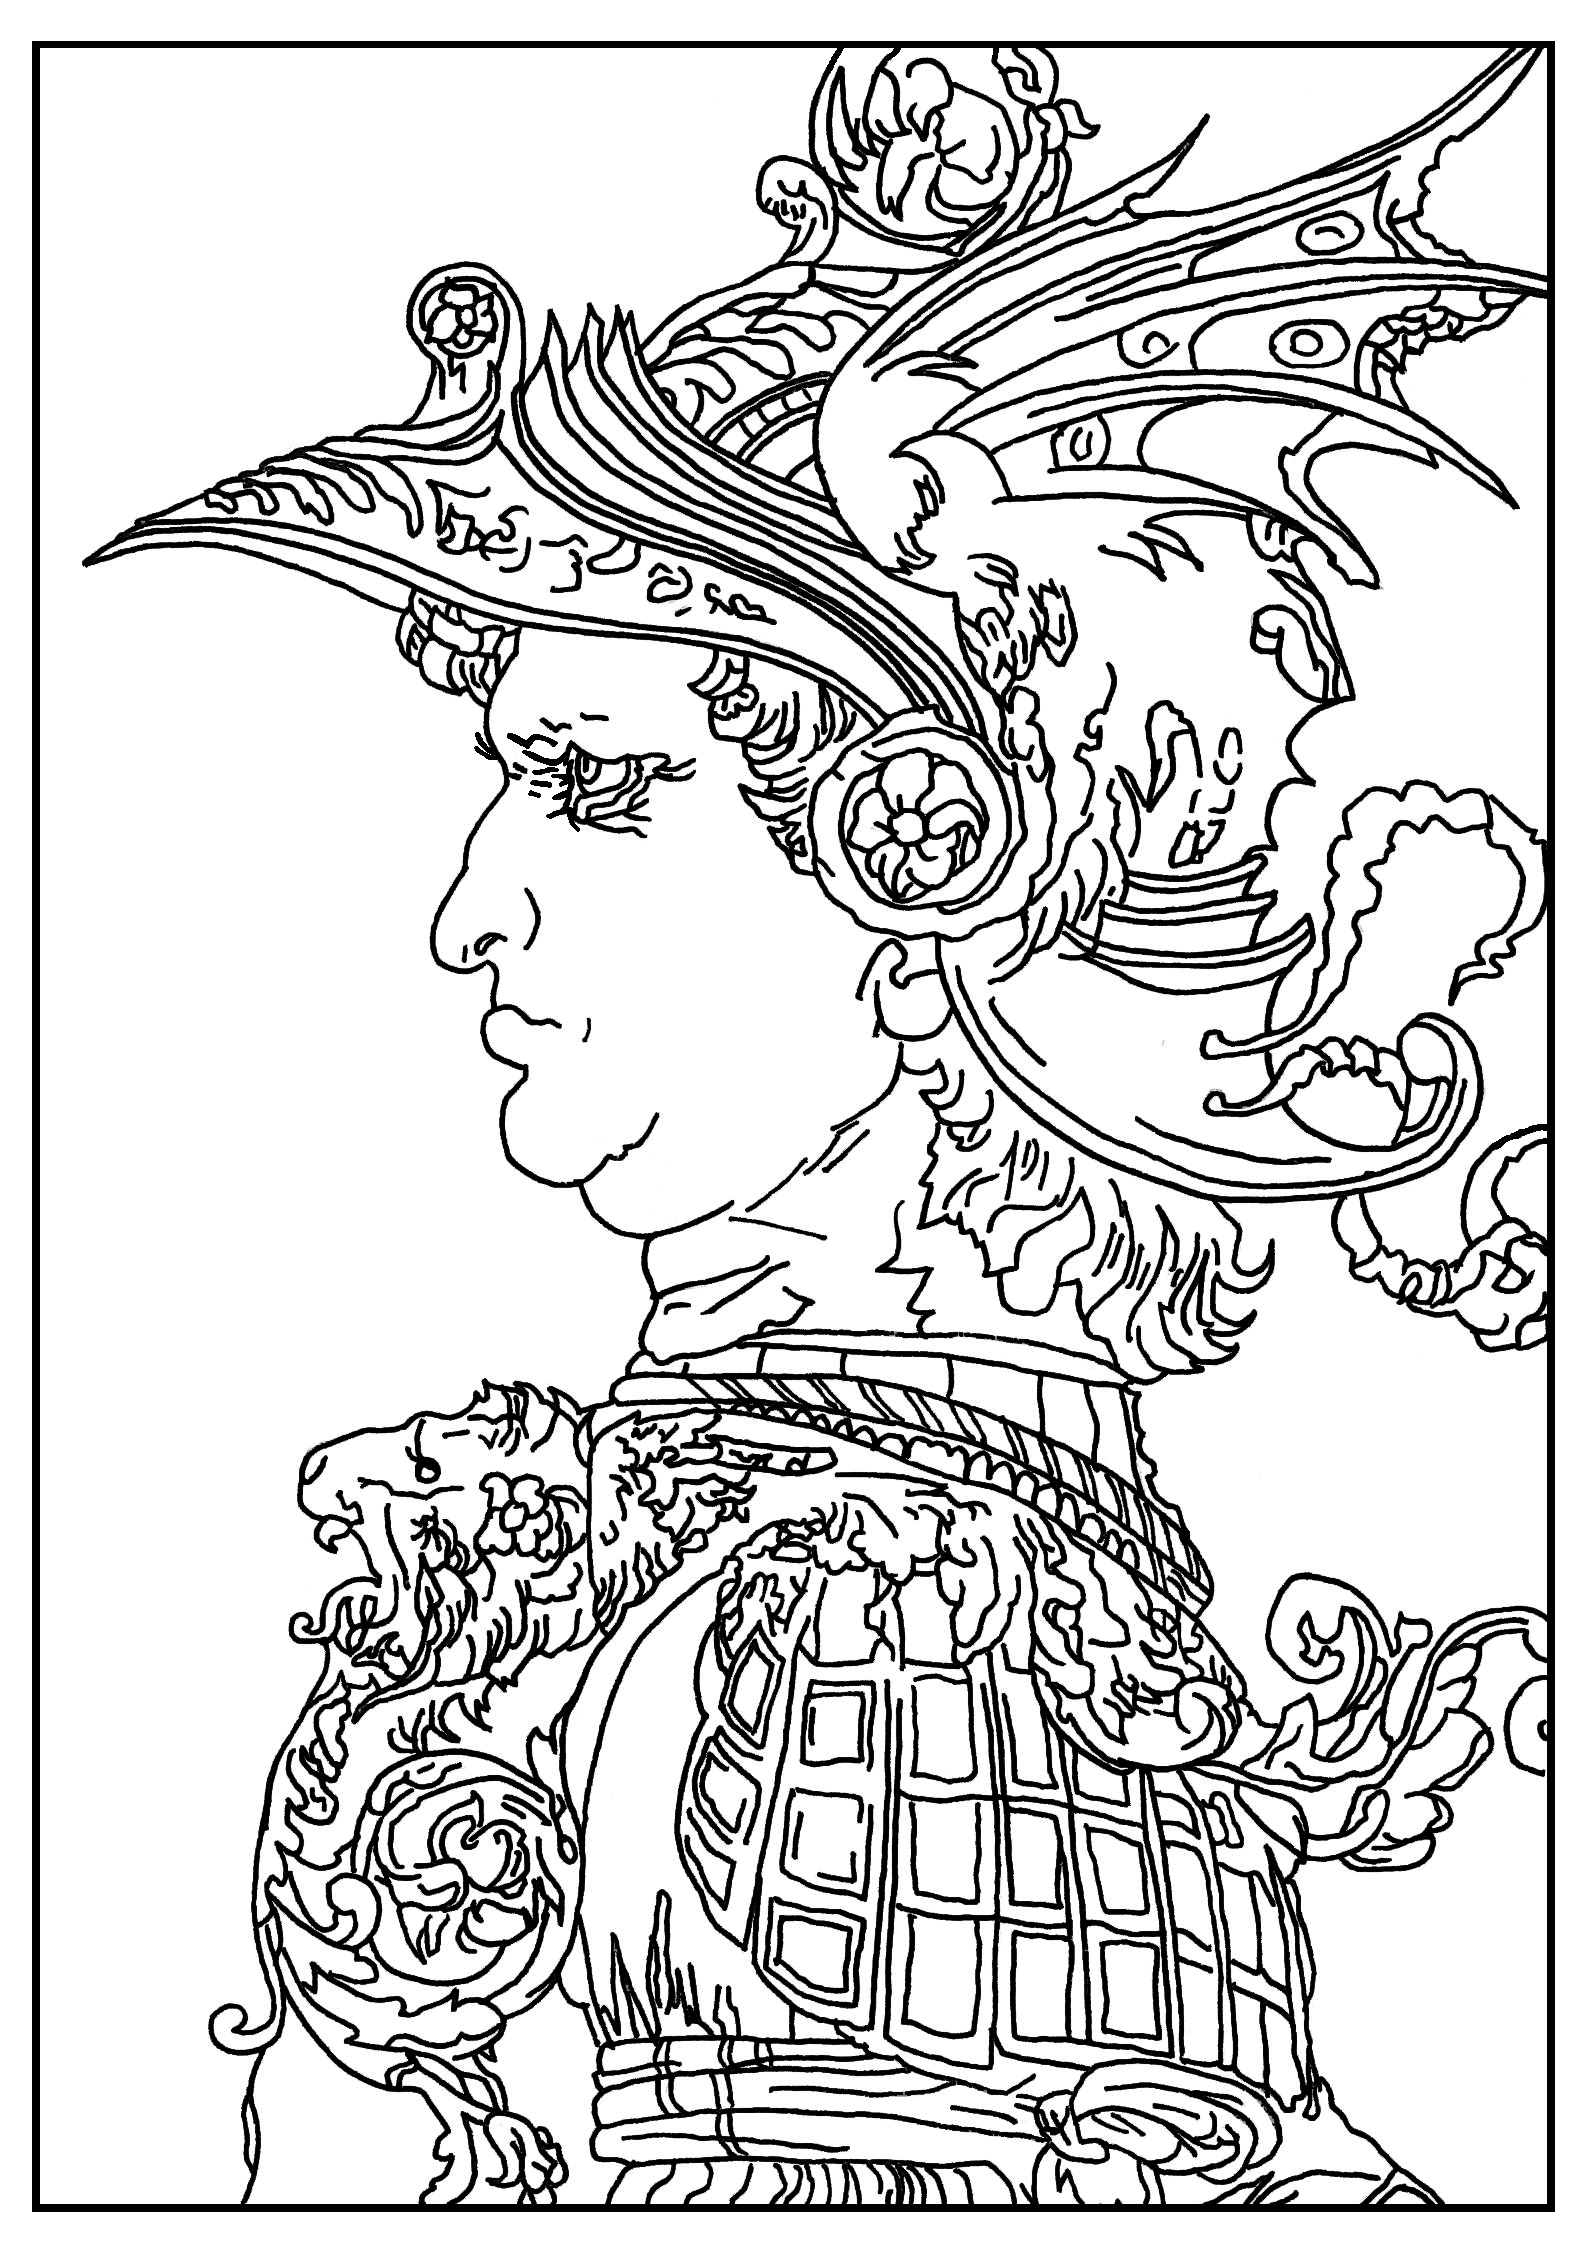 Página para colorear creada a partir de un dibujo de Leonardo Da Vinci : Perfil de un guerrero con casco (1477)